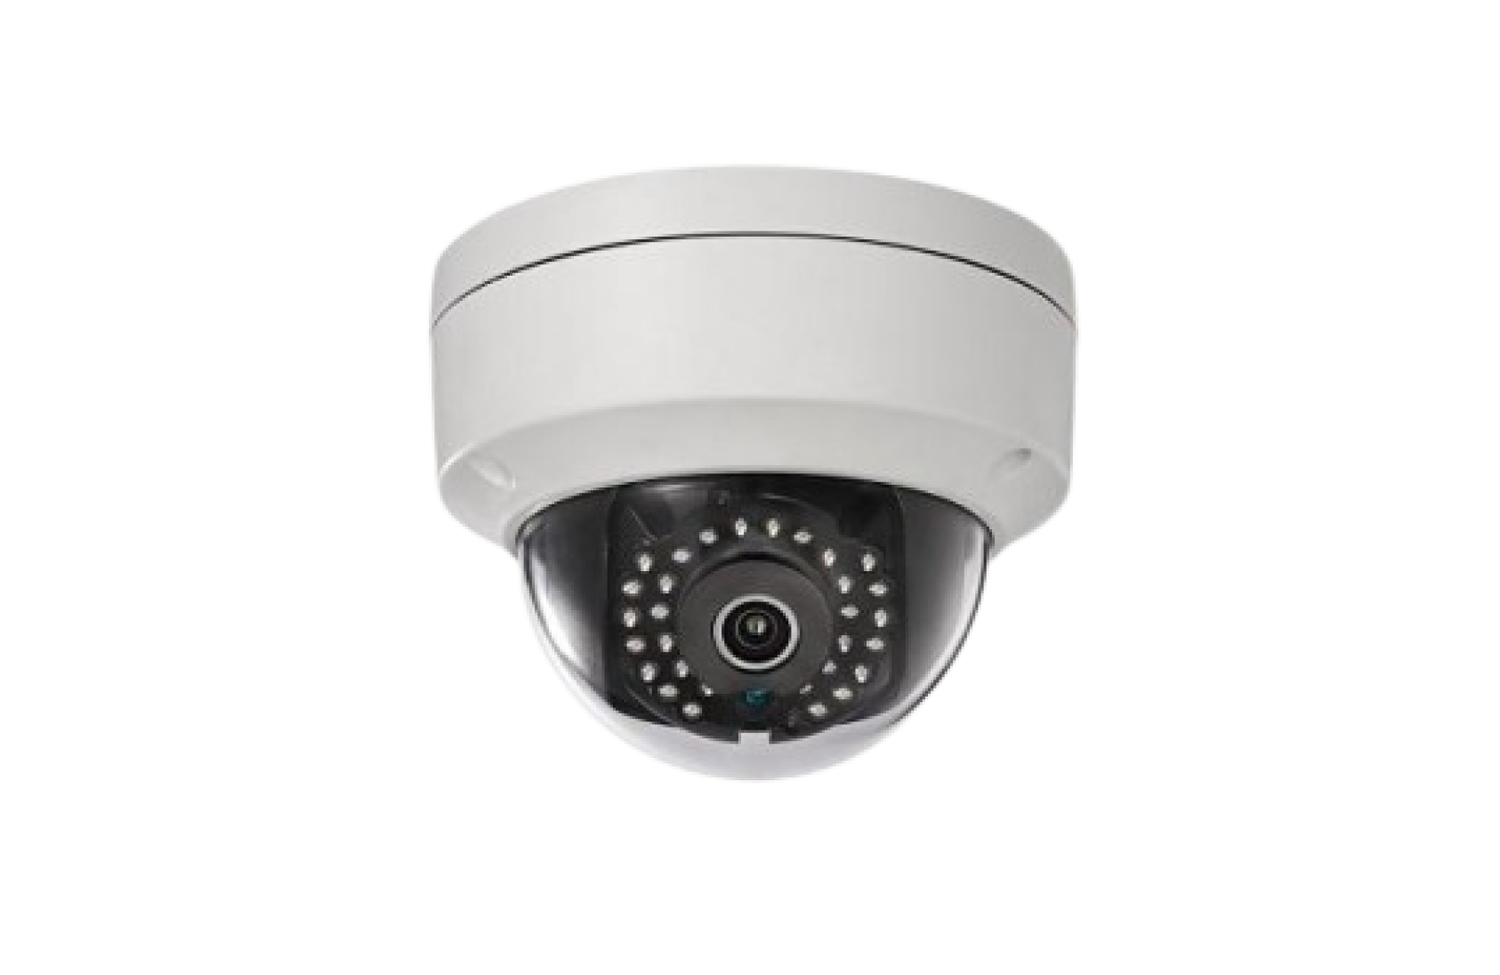 home CCTV camera product